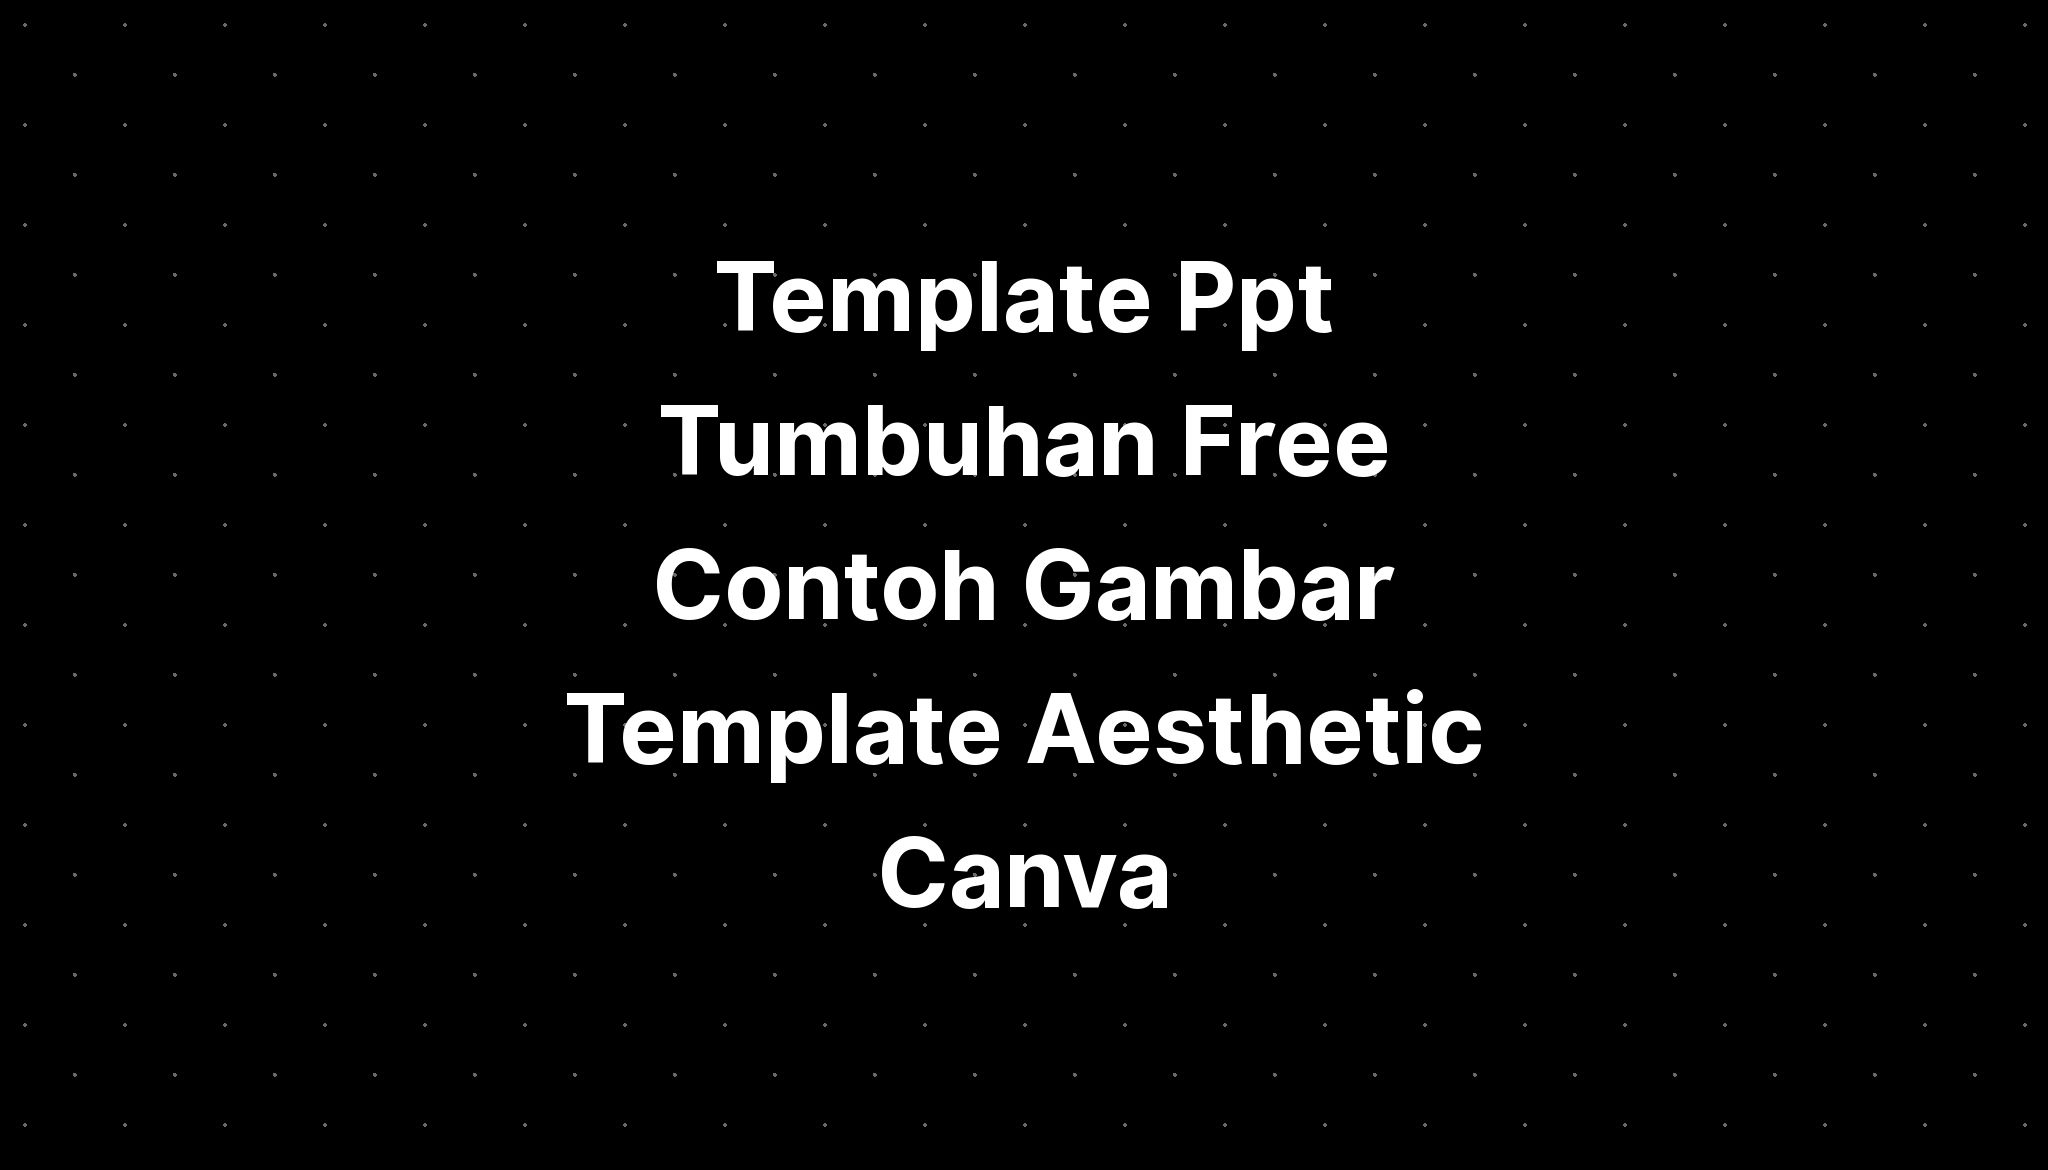 Template Ppt Tumbuhan Free Contoh Gambar Template Aesthetic Canva ...